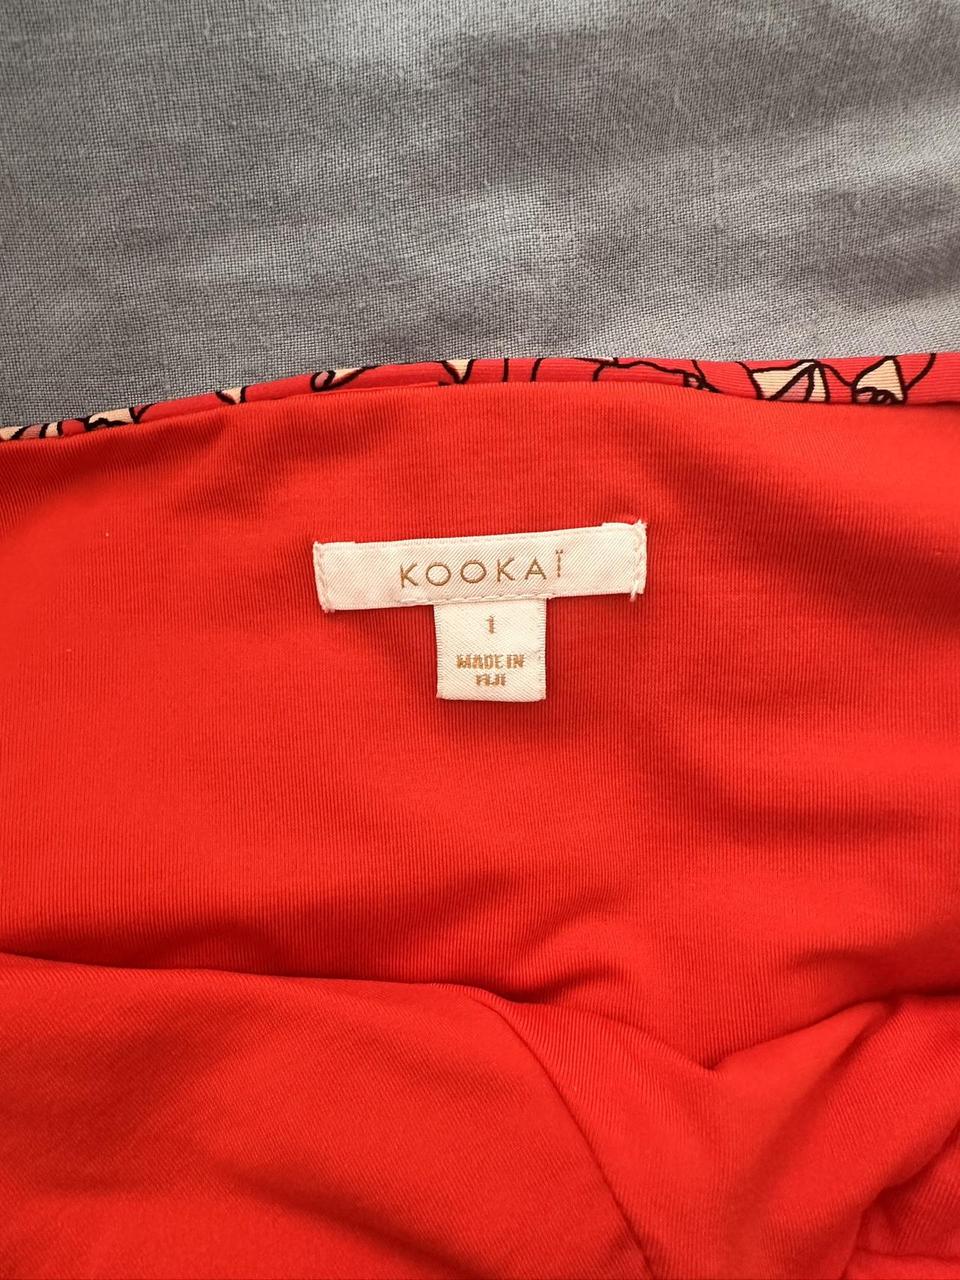 Kookai Red Confetti Dress Size 1 (6-8) Excellent... - Depop